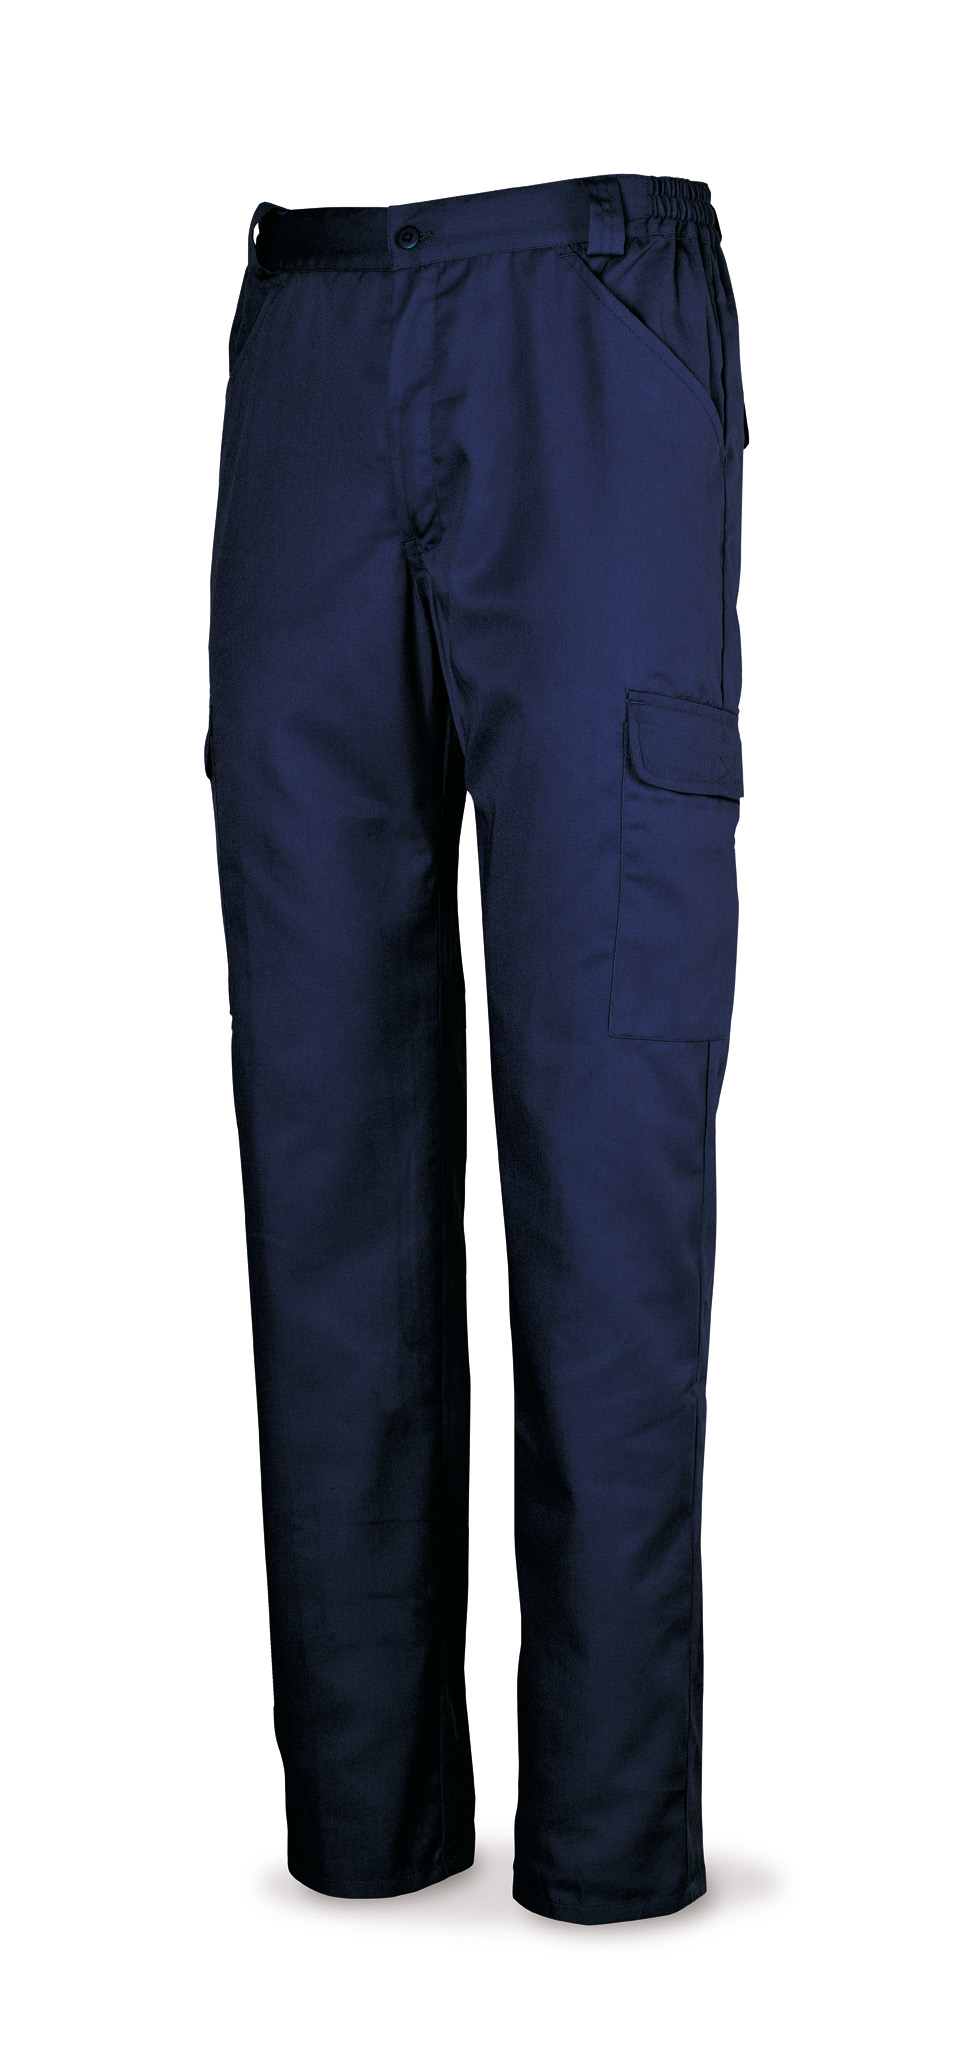 388-PAM Vestuario Laboral Serie Básica Pantalón azul marino tergal 200 g. Multibolsillos.